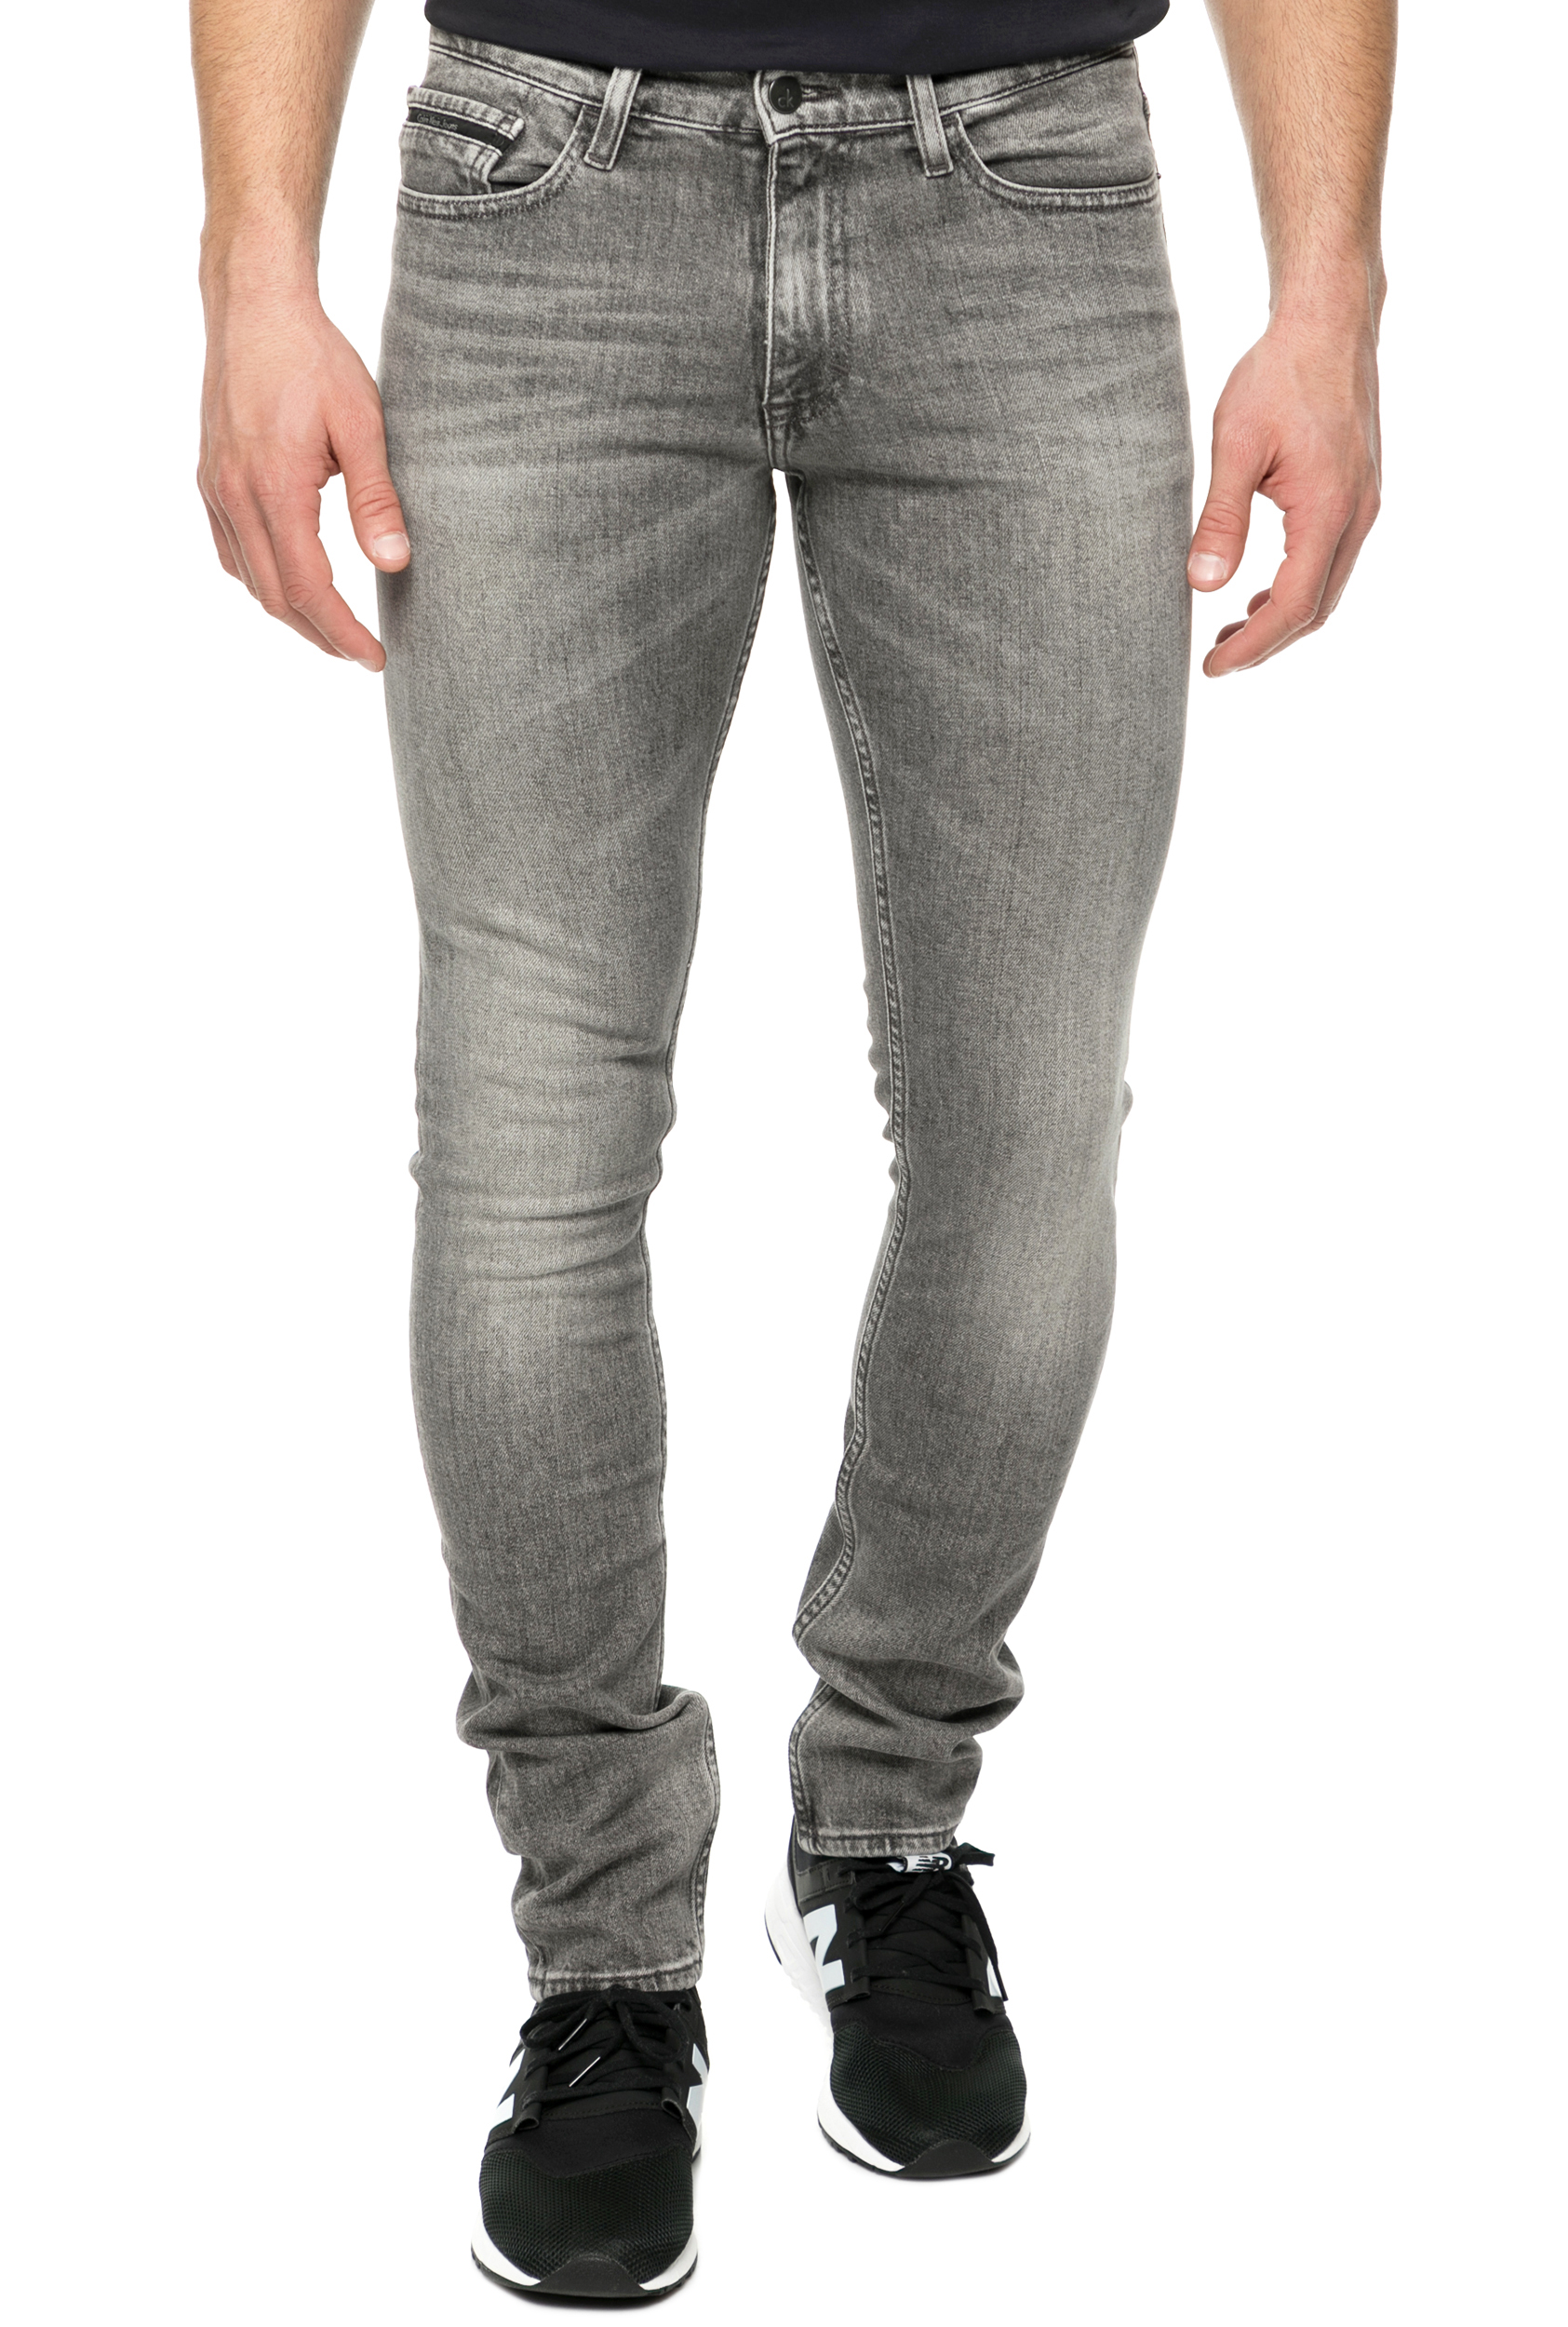 CALVIN KLEIN JEANS - Ανδρικό τζιν παντελόνι Calvin Klein Jeans γκρι